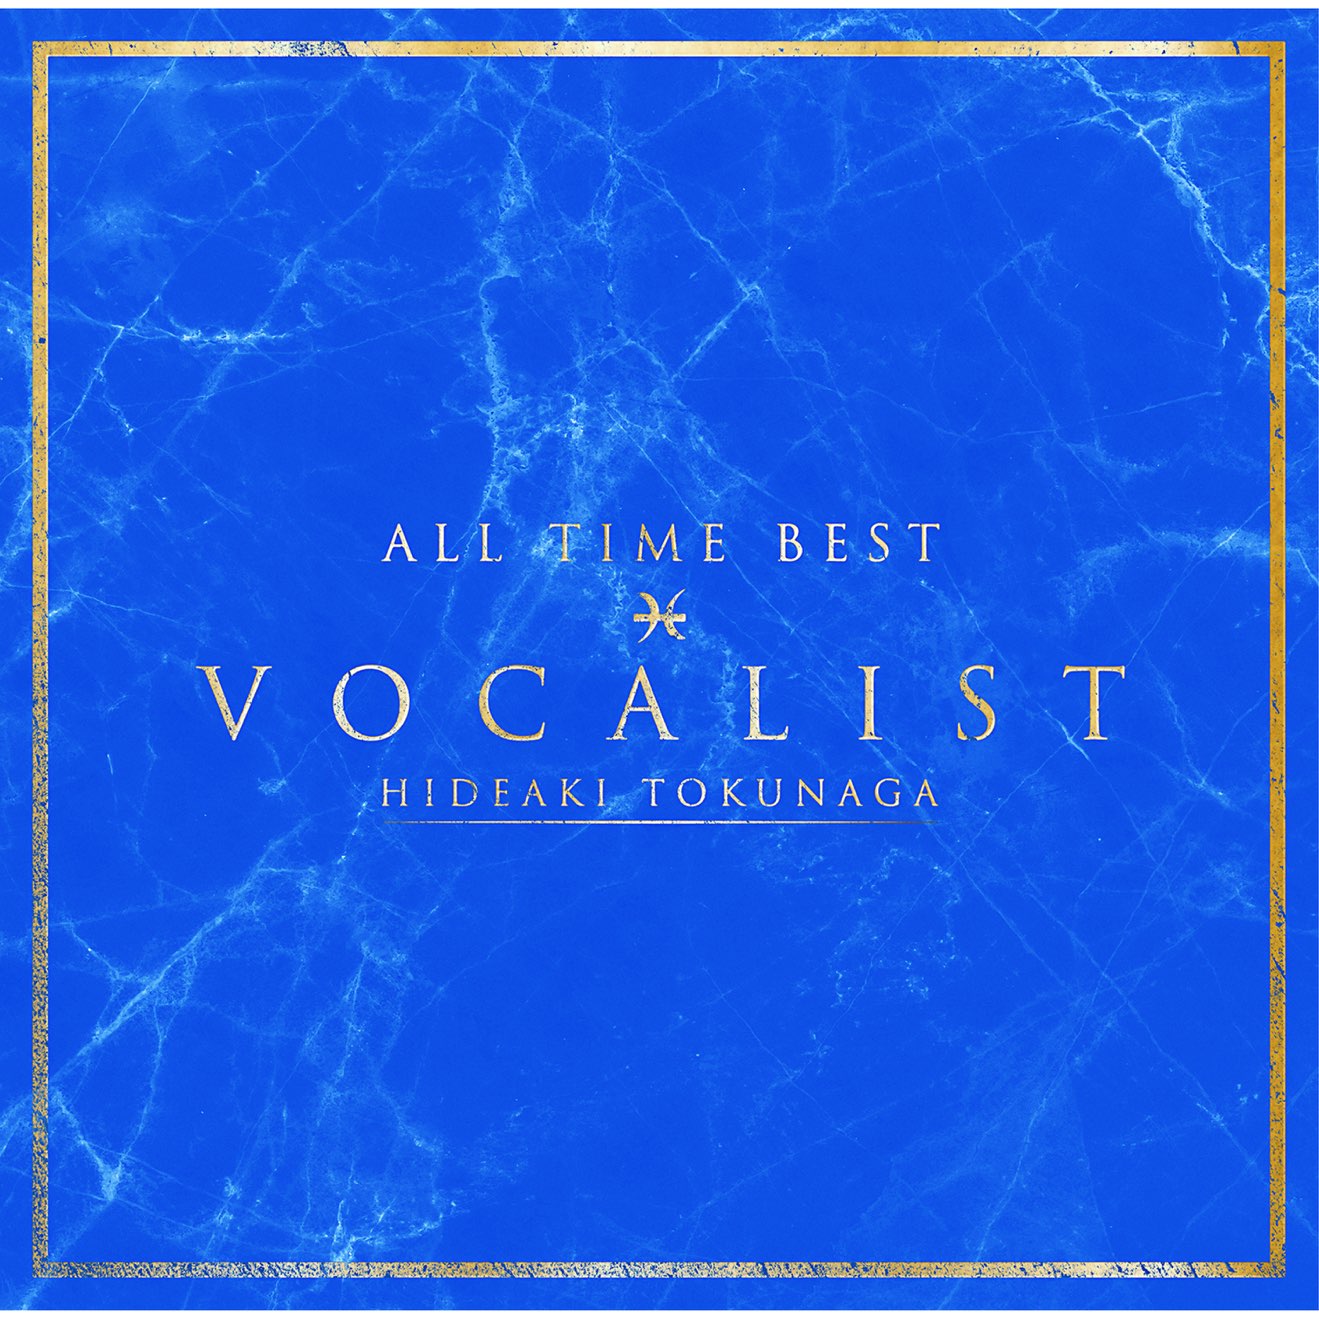 Hideaki Tokunaga - All Time Best Vocalist (2016) [iTunes Match M4A]